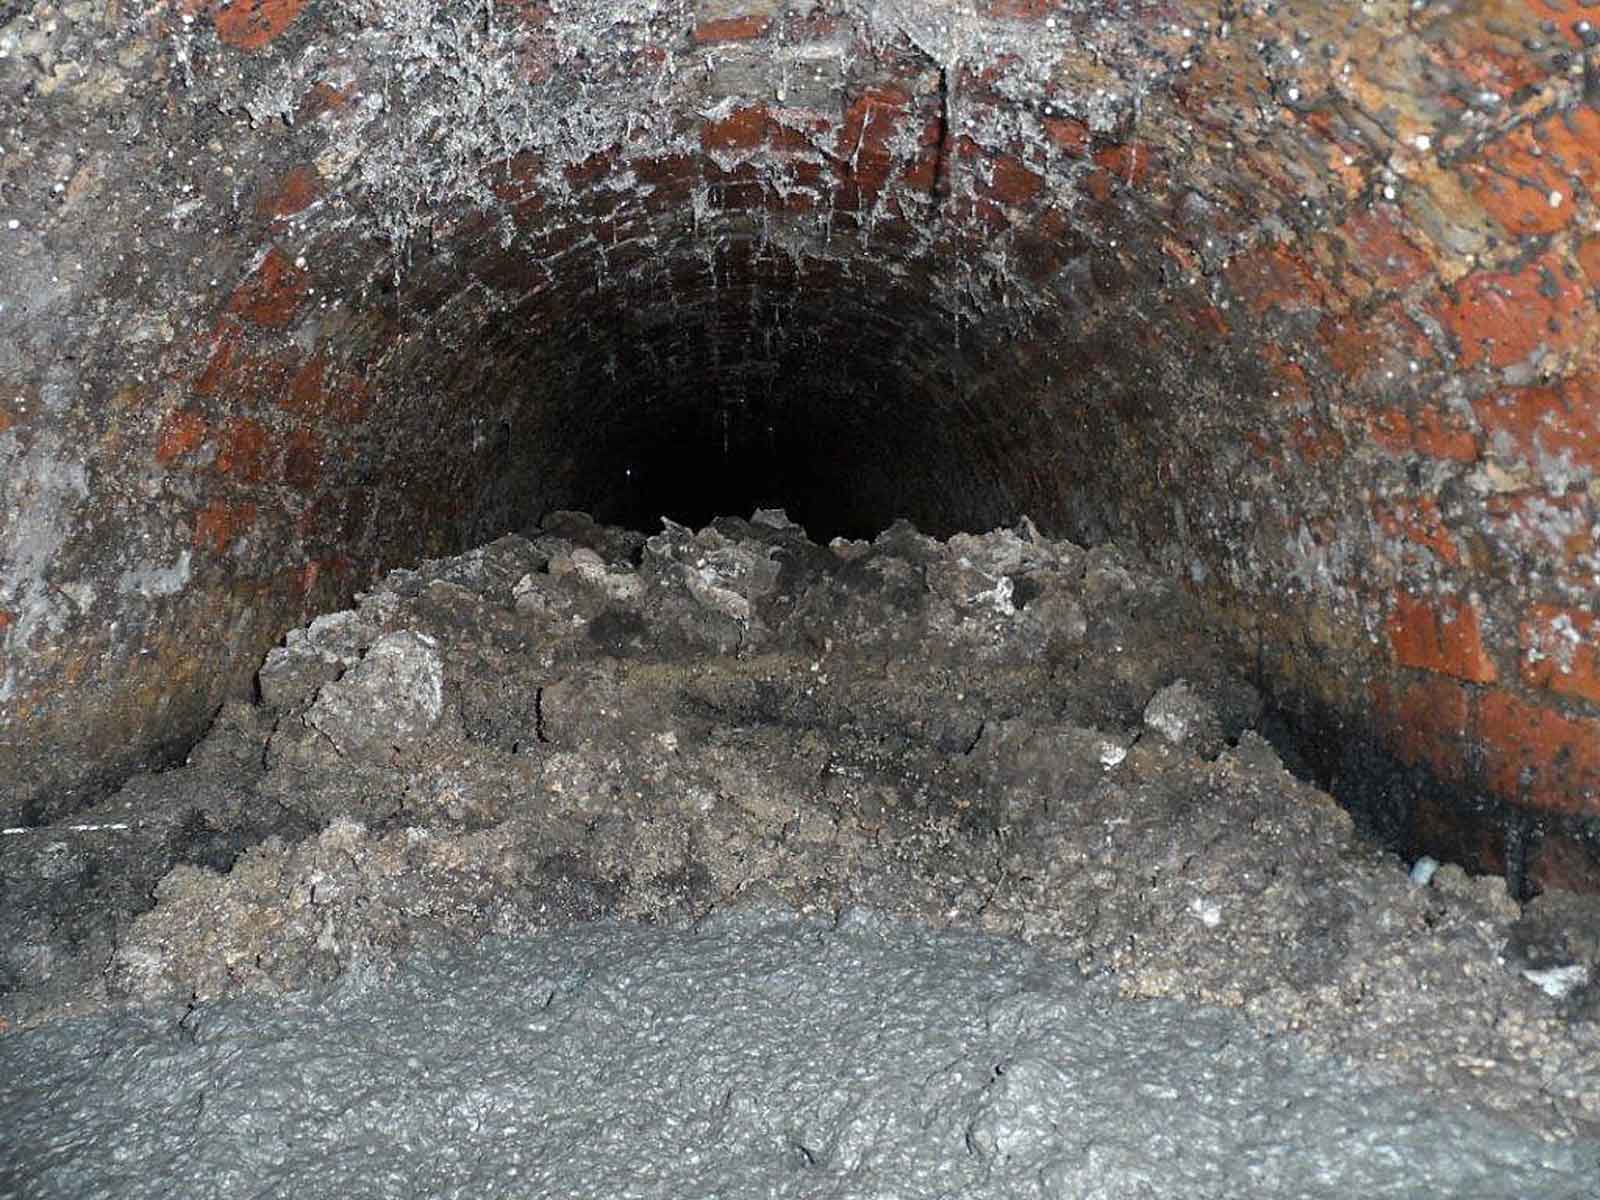 A Harrogate sewer